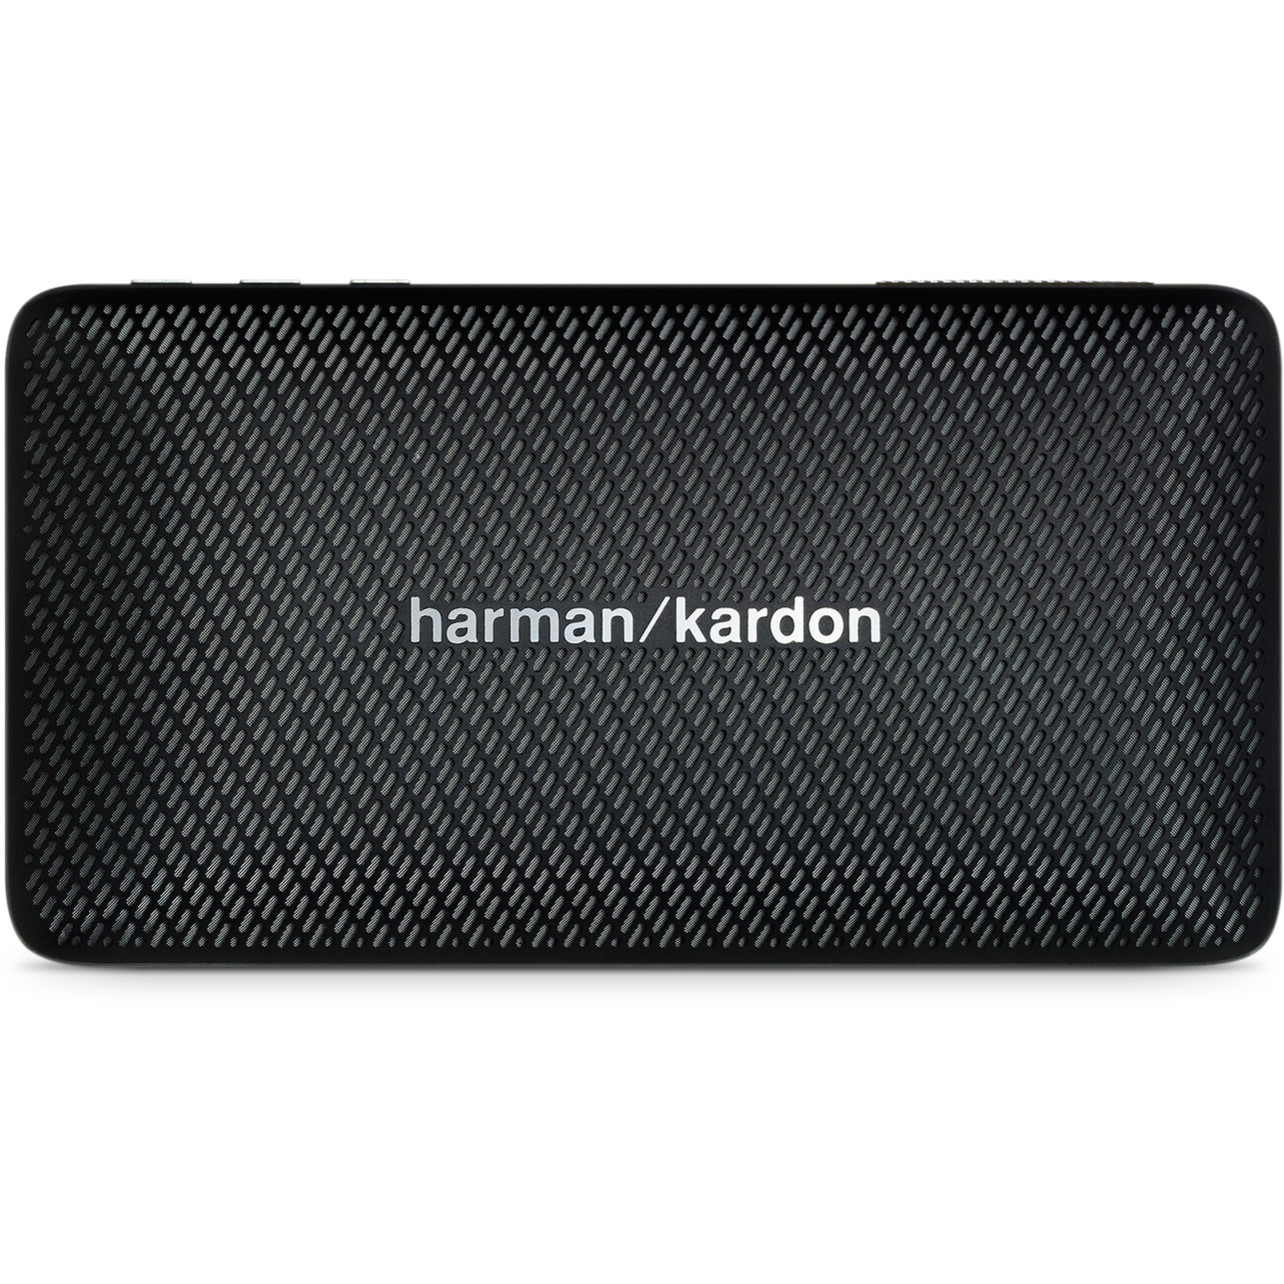  Boxa portabila wireless Harman Kardon HKESQUIREMINIBLKEU, Negru 